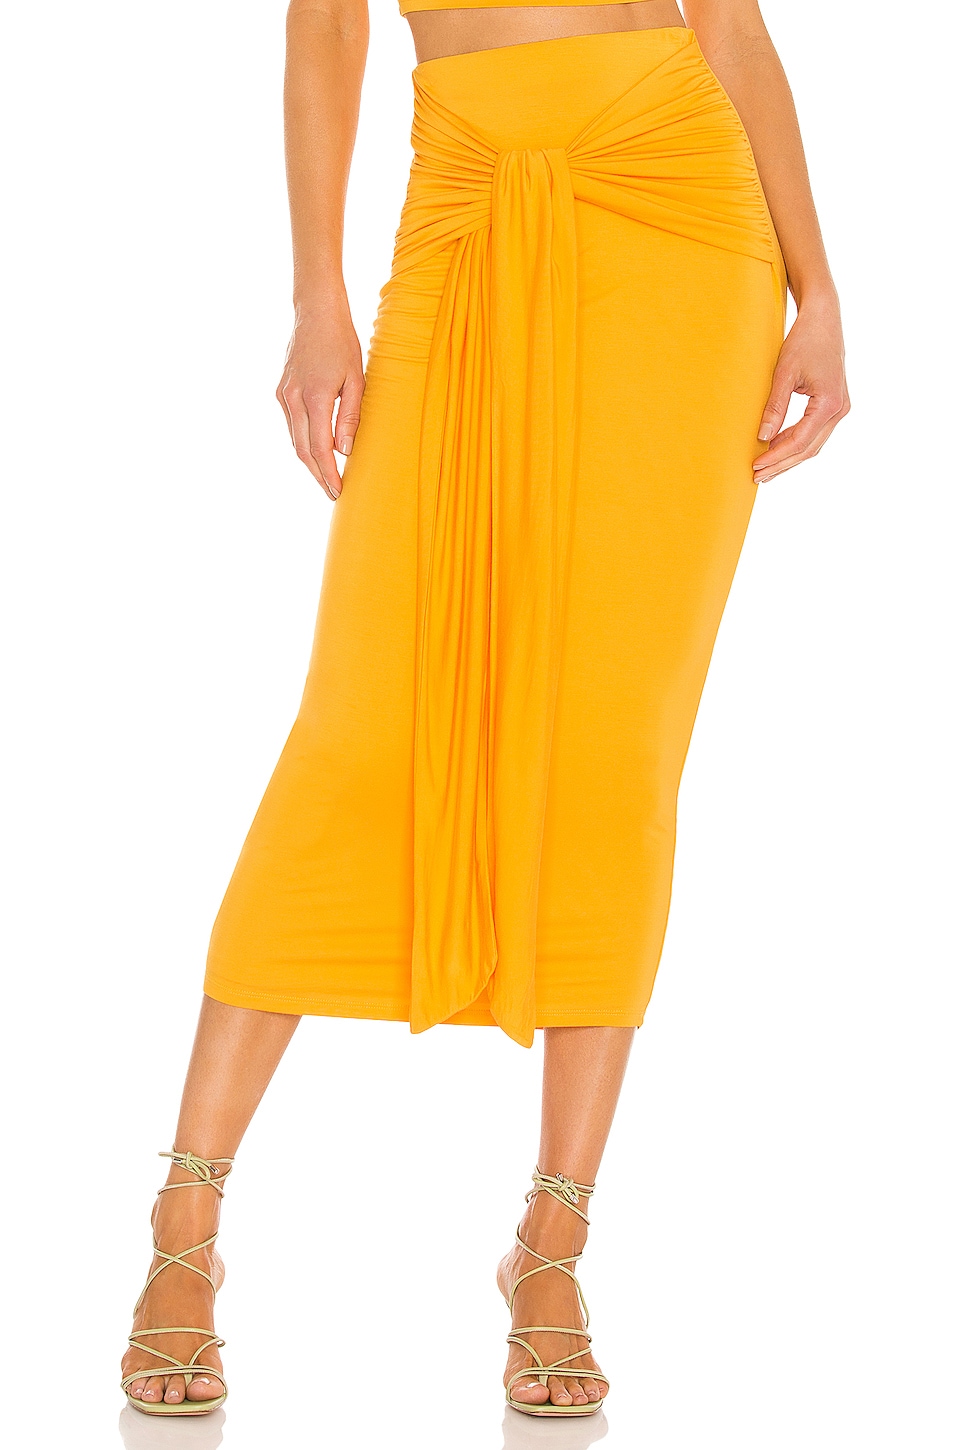 Camila Coelho Pixie Skirt Tangerine Orange